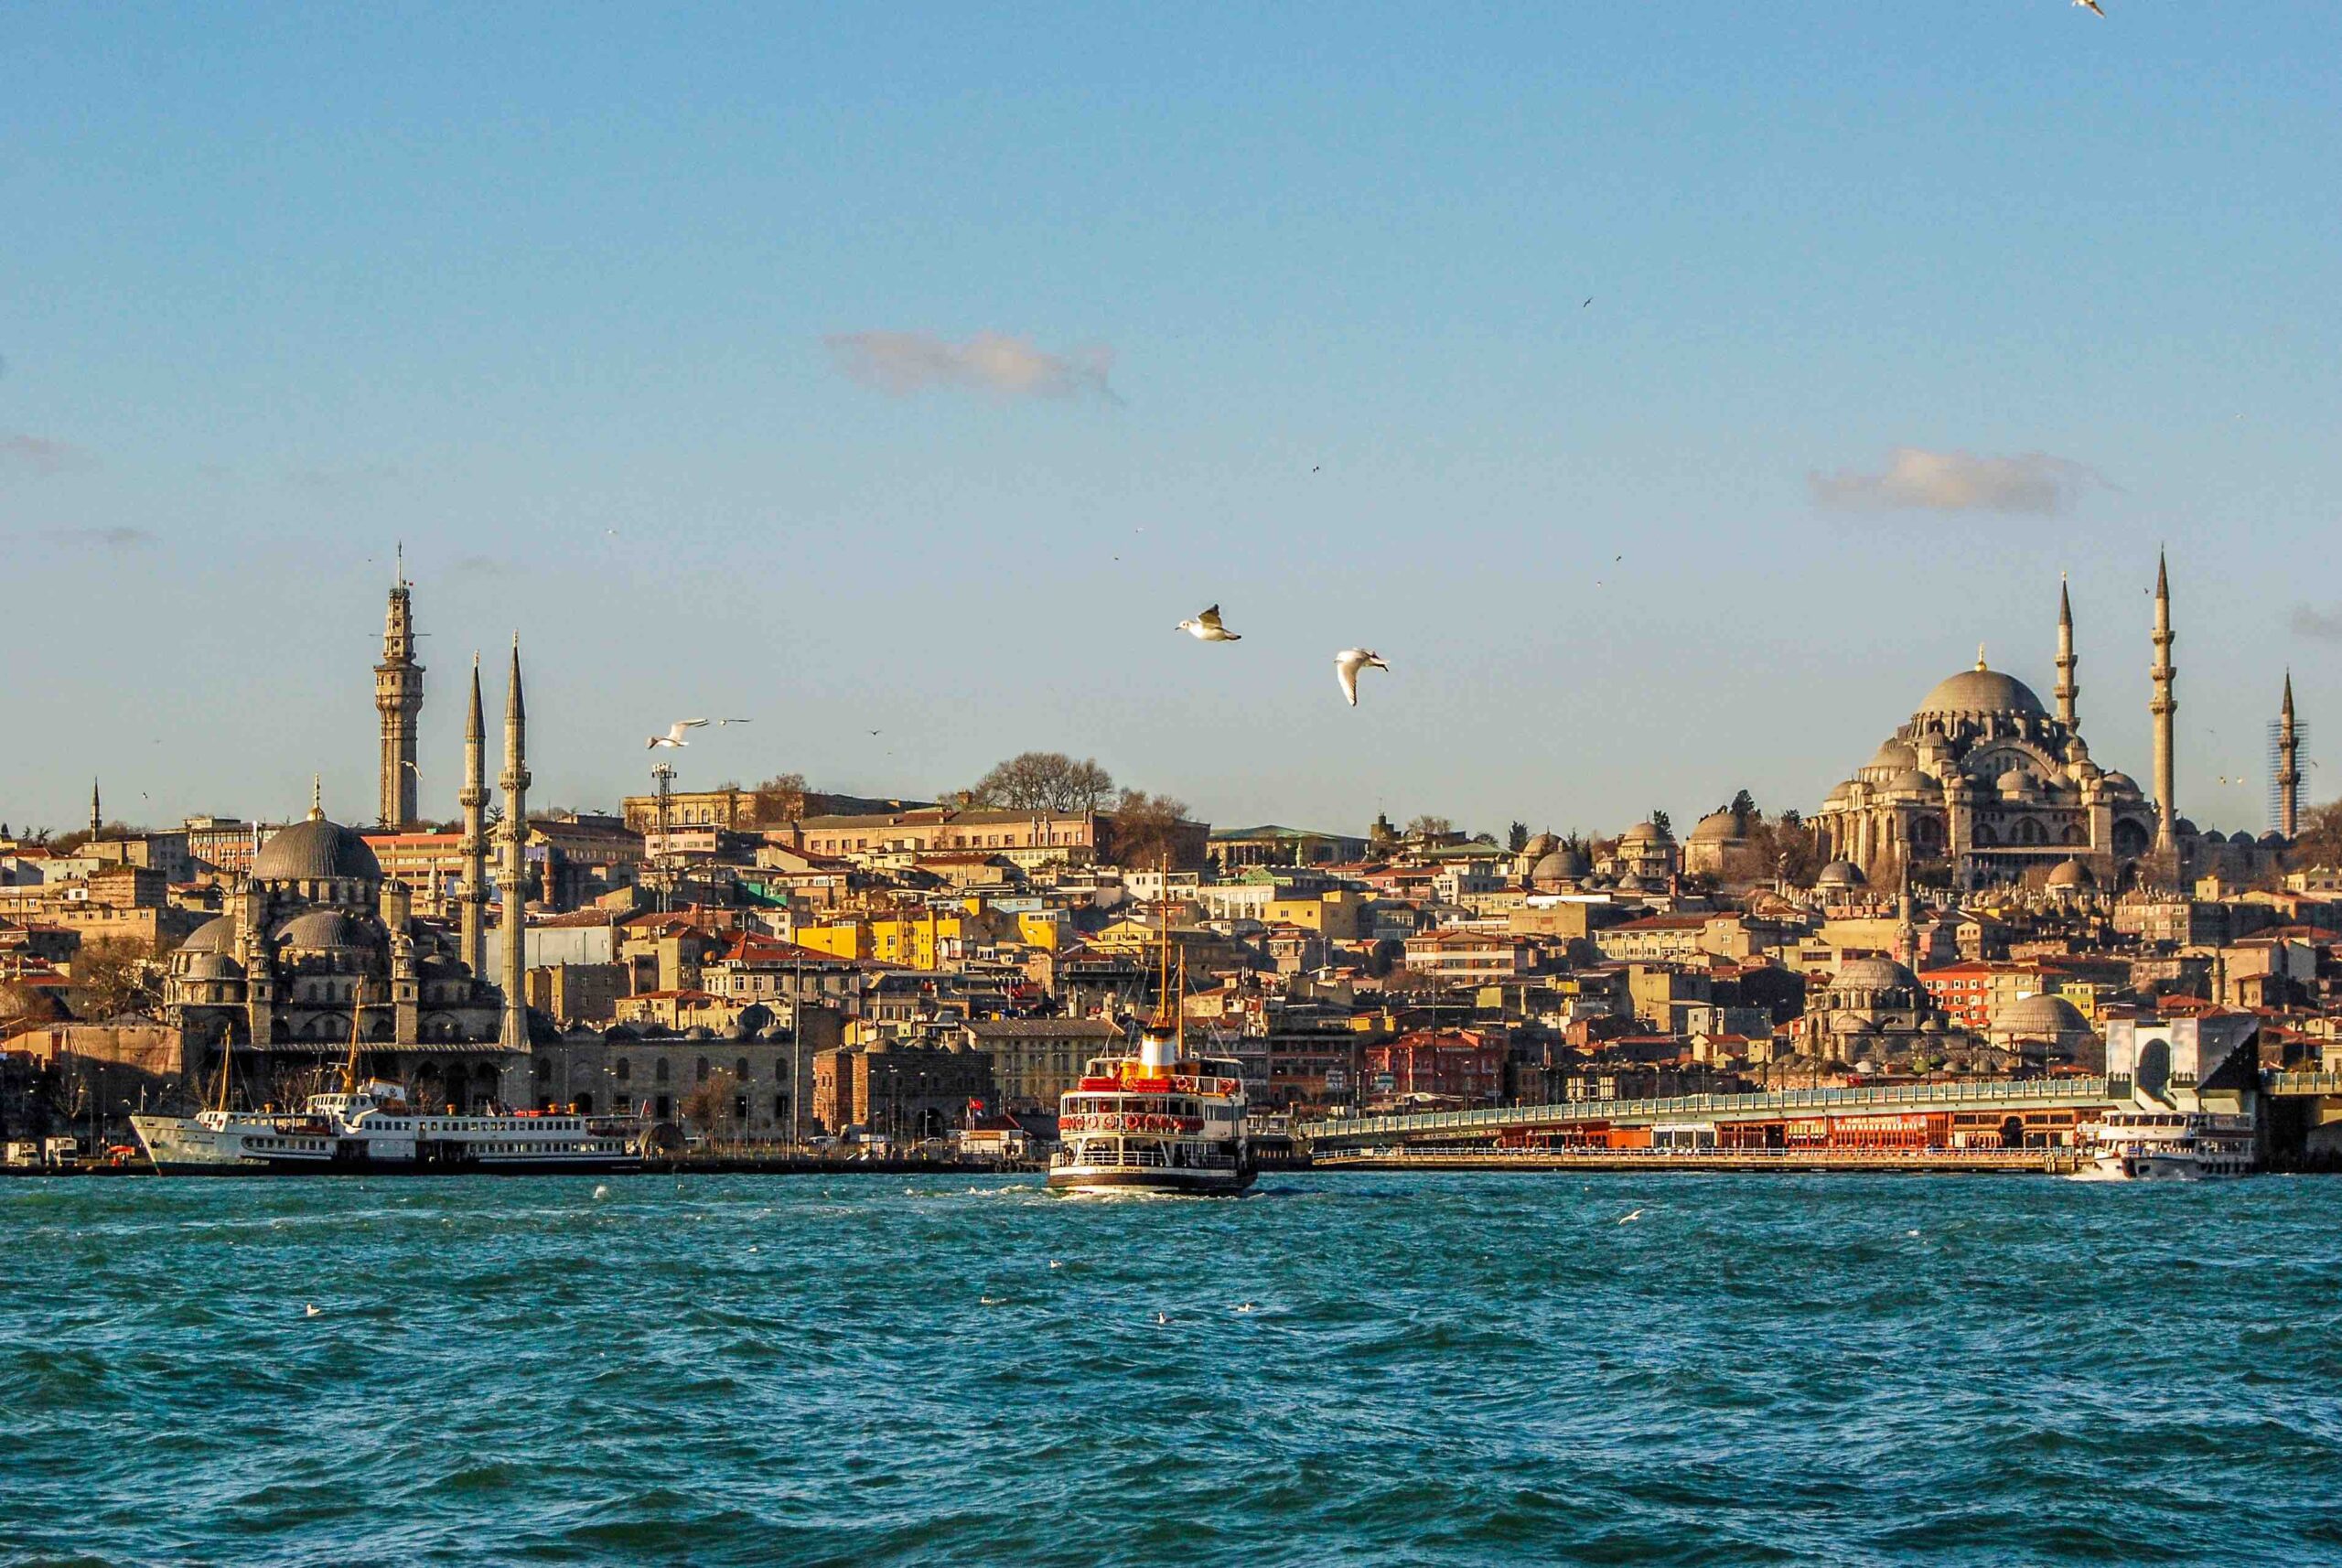 Shangri-La Bosphorus Istanbul